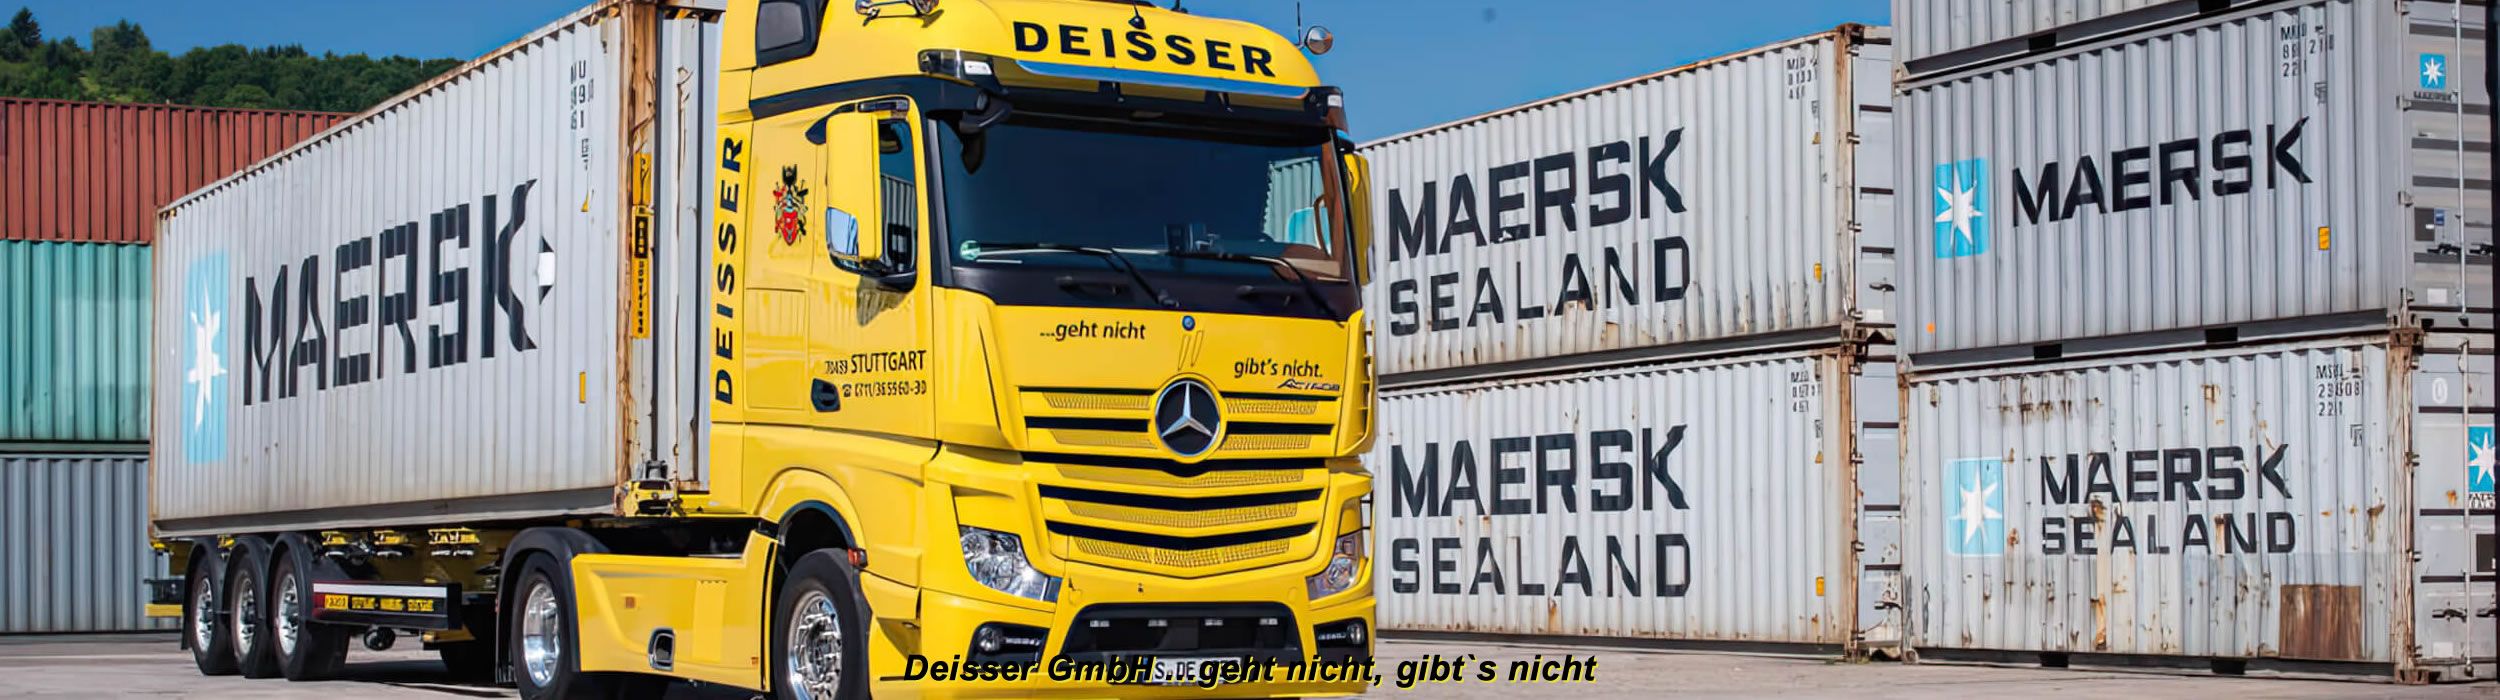 Deisser GmbH / Transportlogistik Seecontainer / Depot